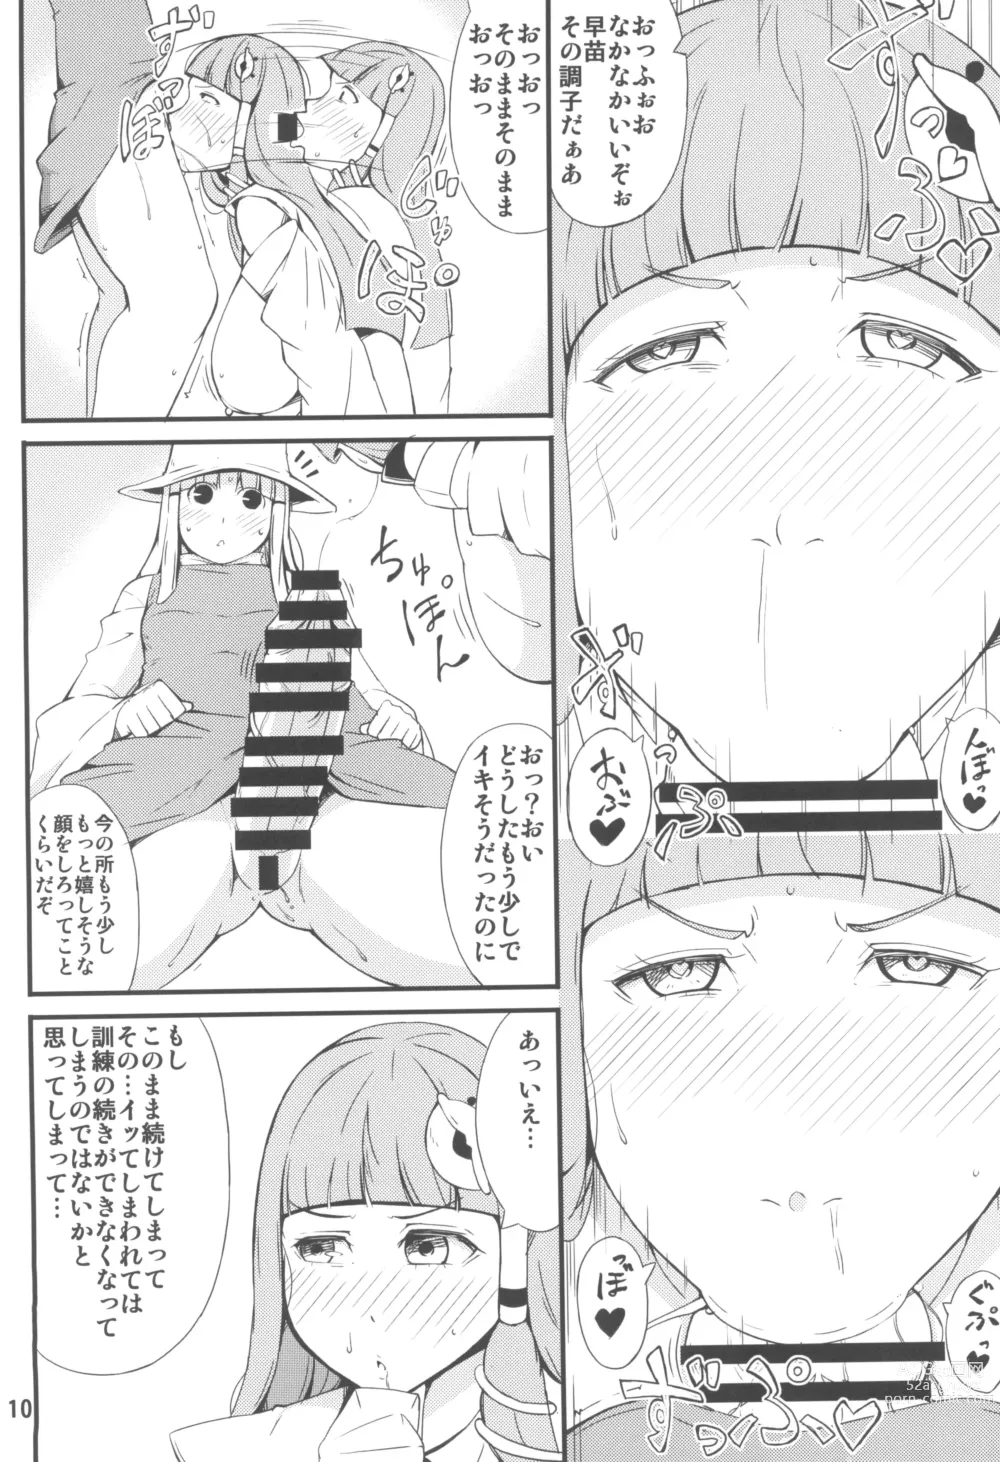 Page 10 of doujinshi Kamisama LESSON